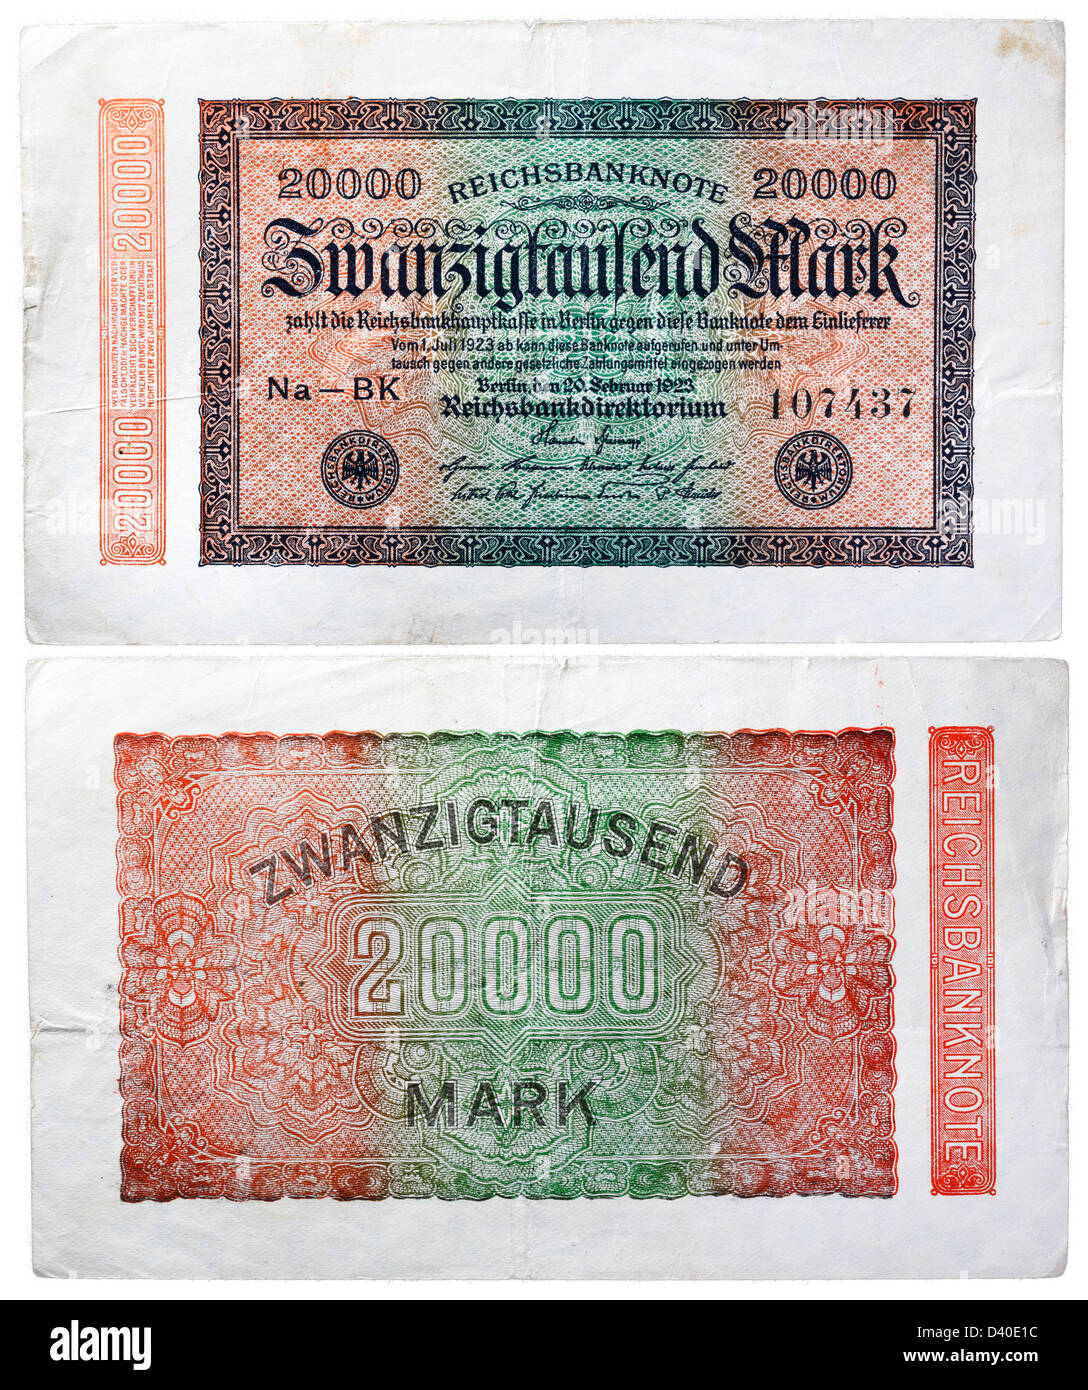 20000 Mark banknote, Germany, 1923 Stock Photo